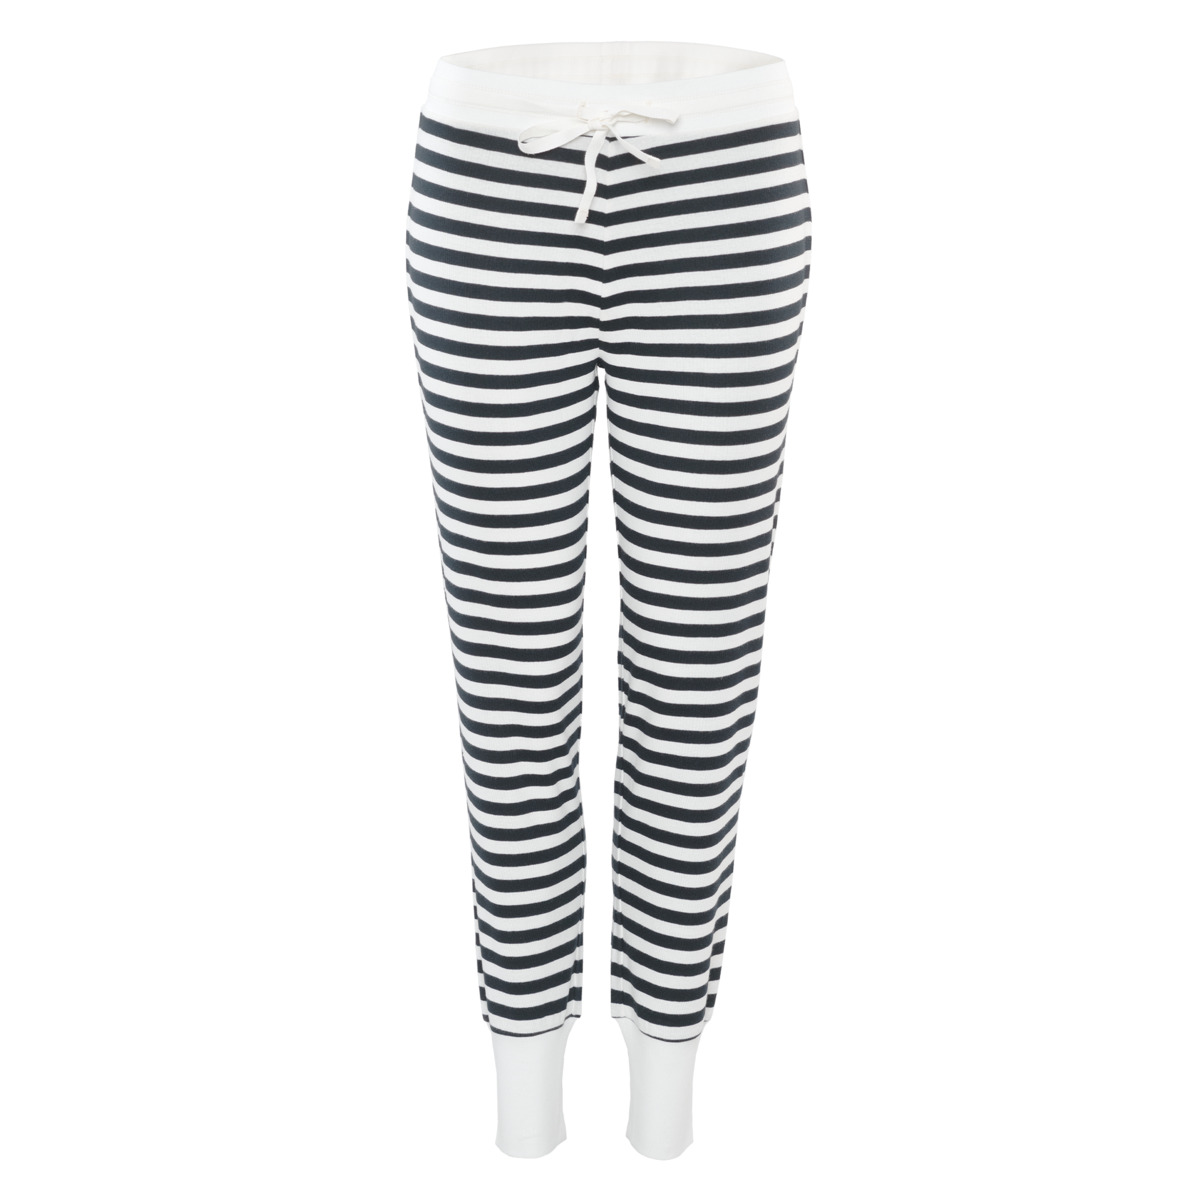 Striped Sleep trousers, AVELINE